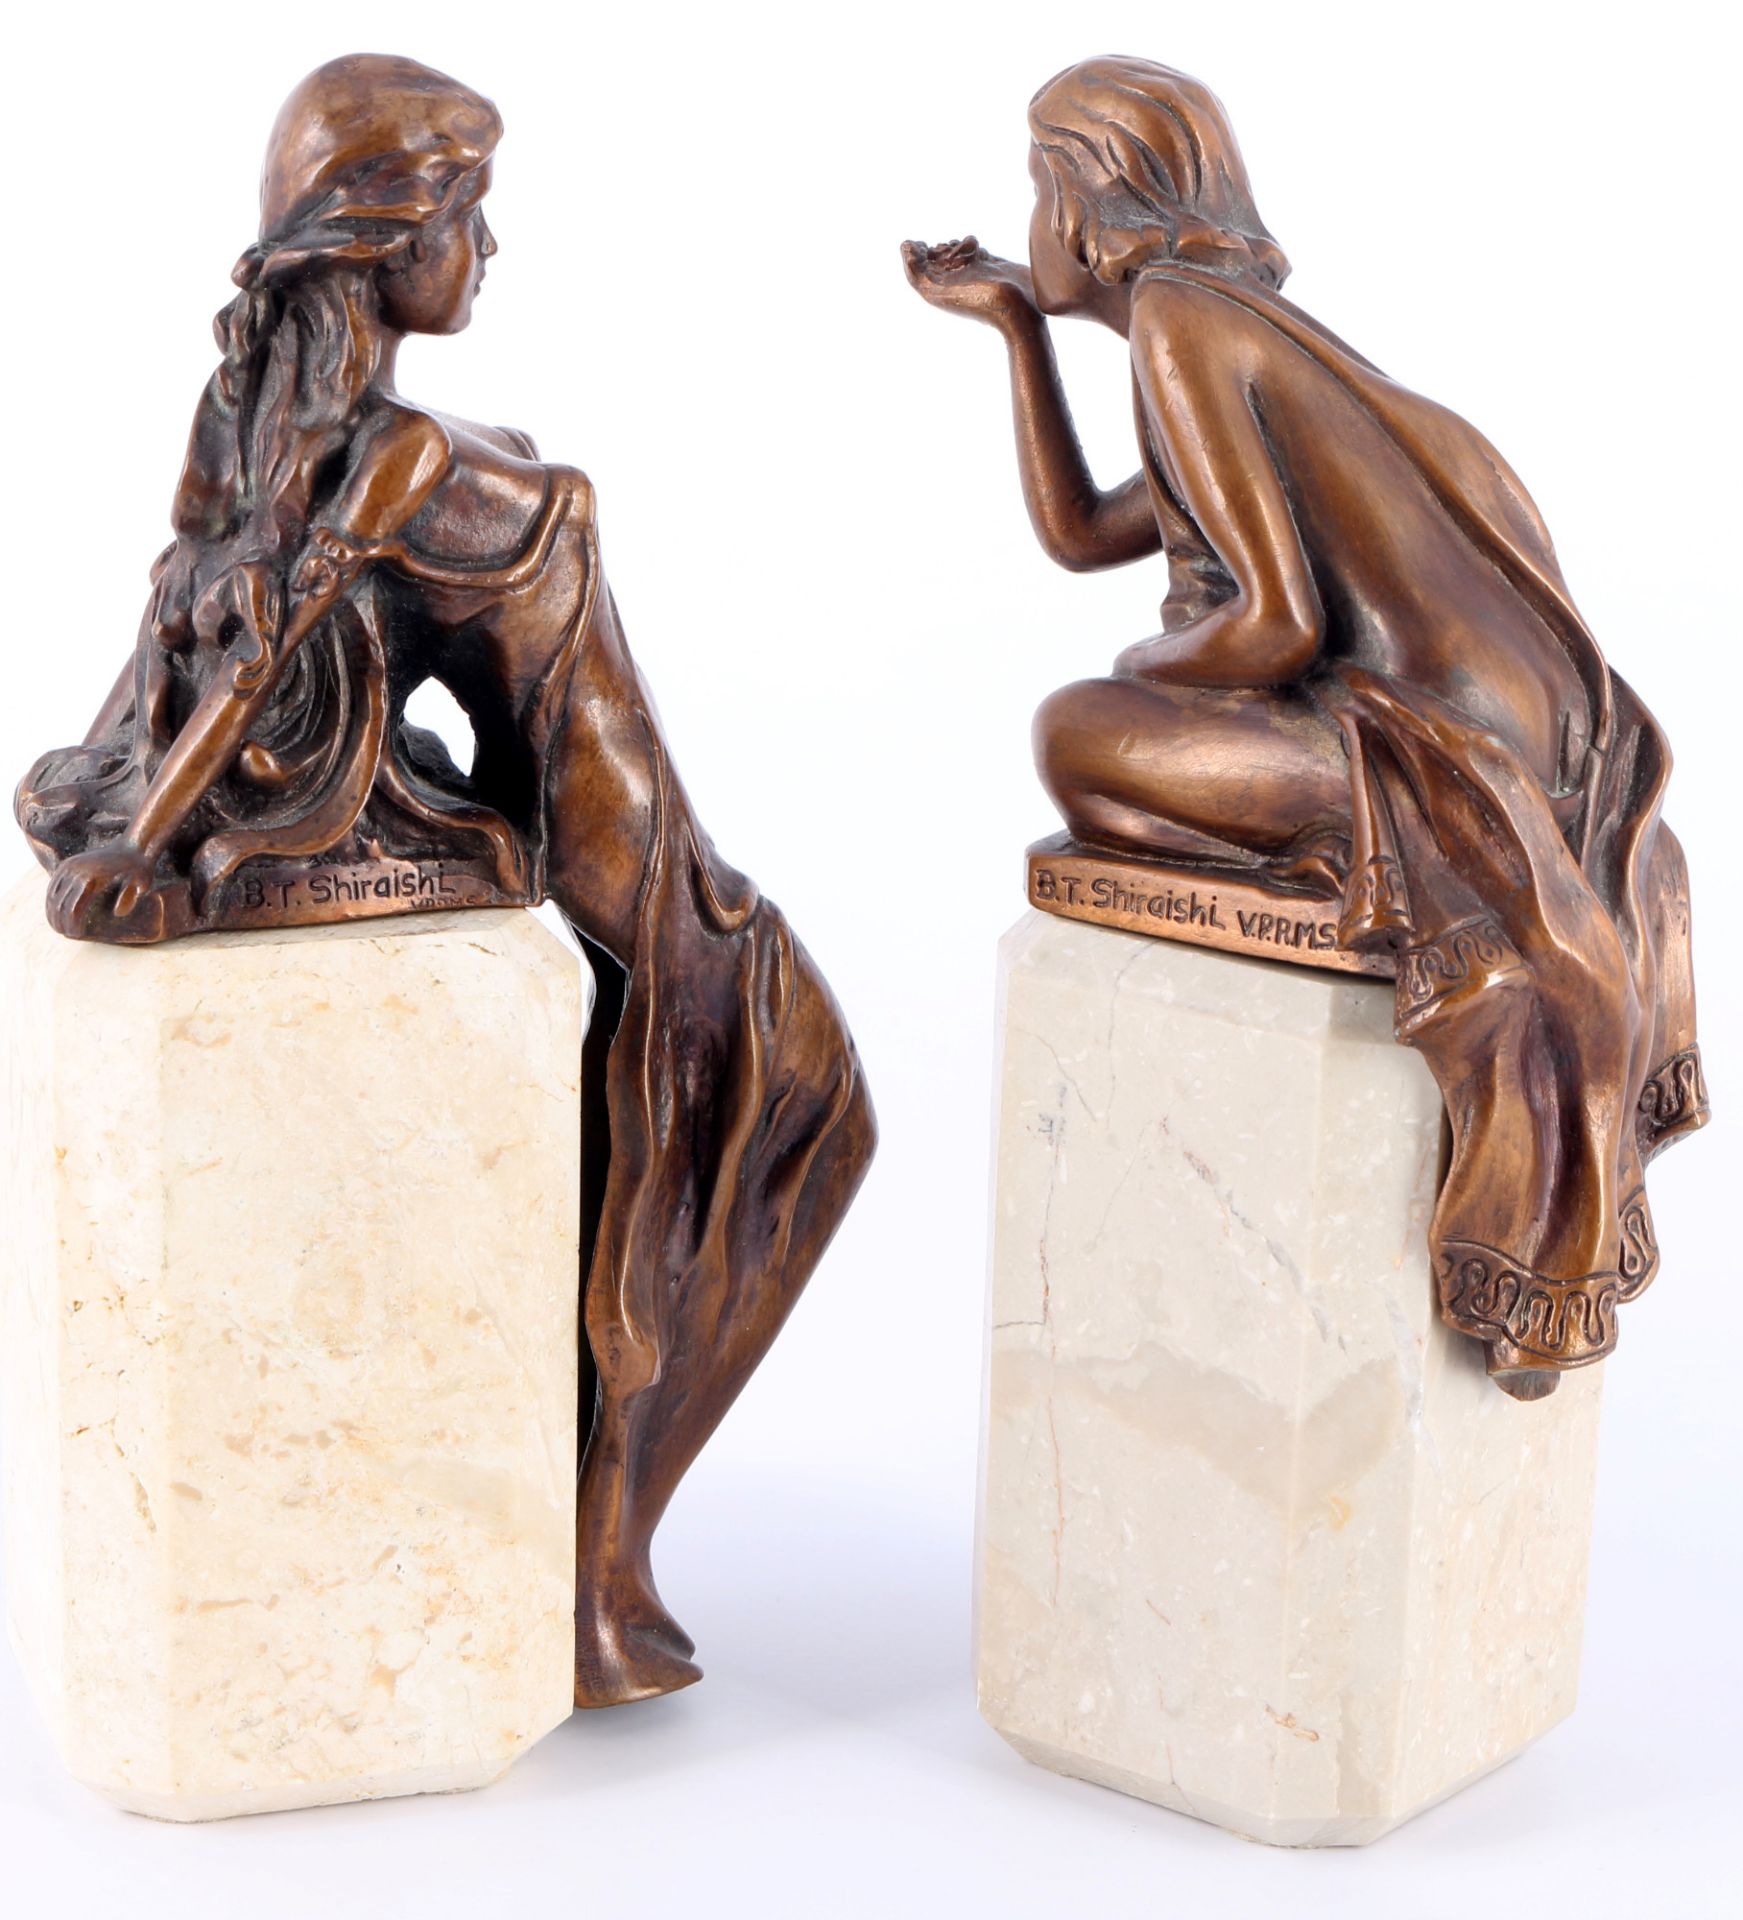 Barry Shiraishi (*1938) 2 Bronzen Les beaux arts Romeo und Julia, bronze Romeo and Juliet, - Bild 4 aus 6